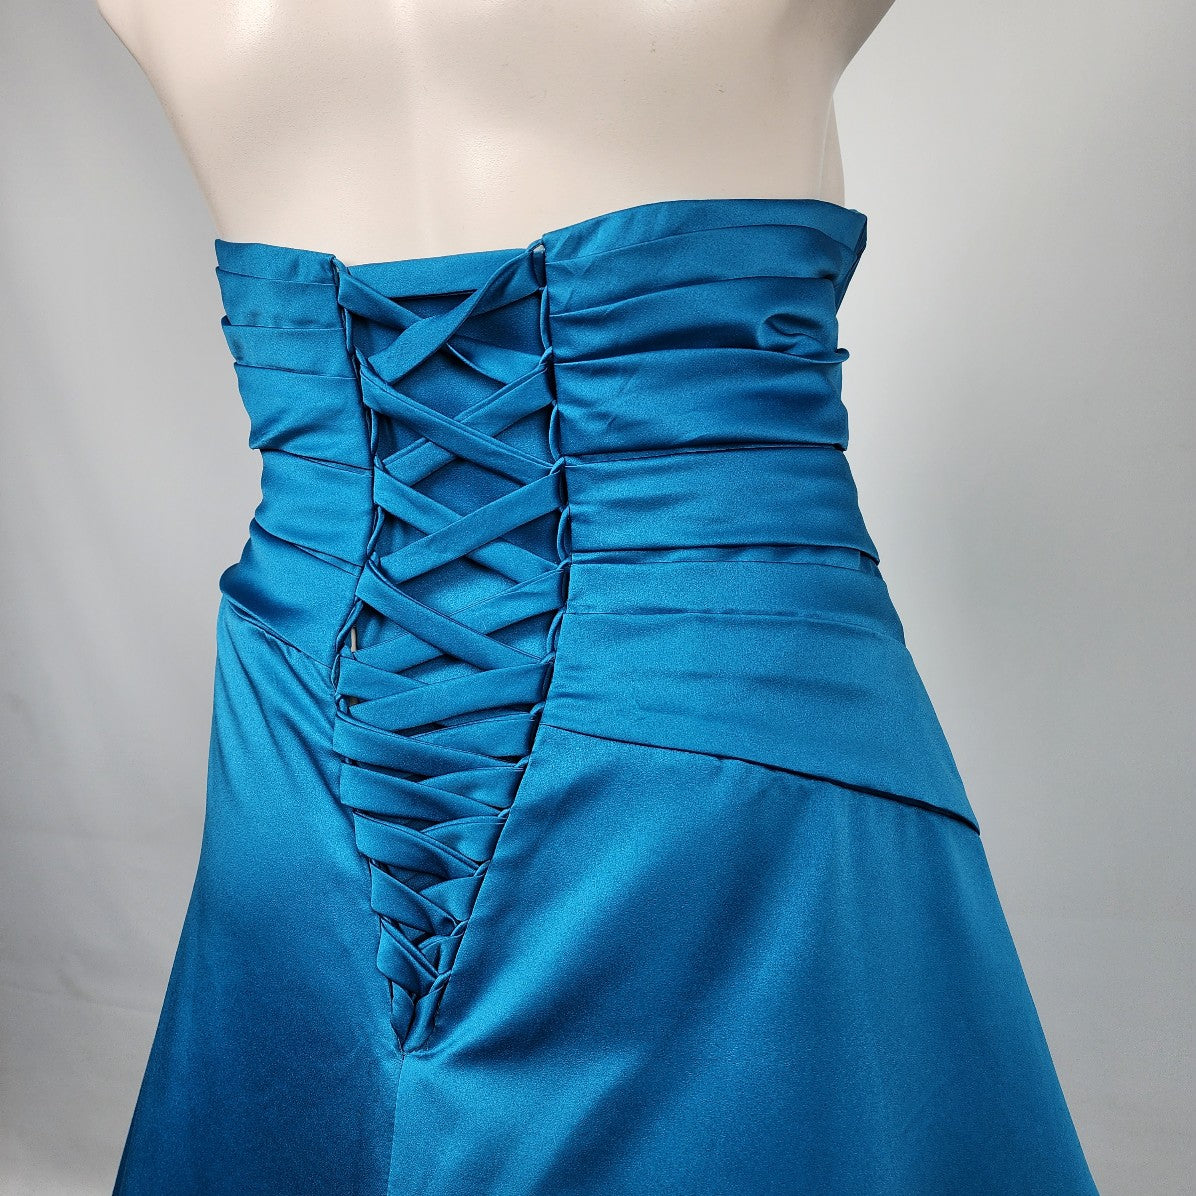 Symphony of Venus Blue Satin Crystal Detail Gown Size 1X-2X Grad Eventwear